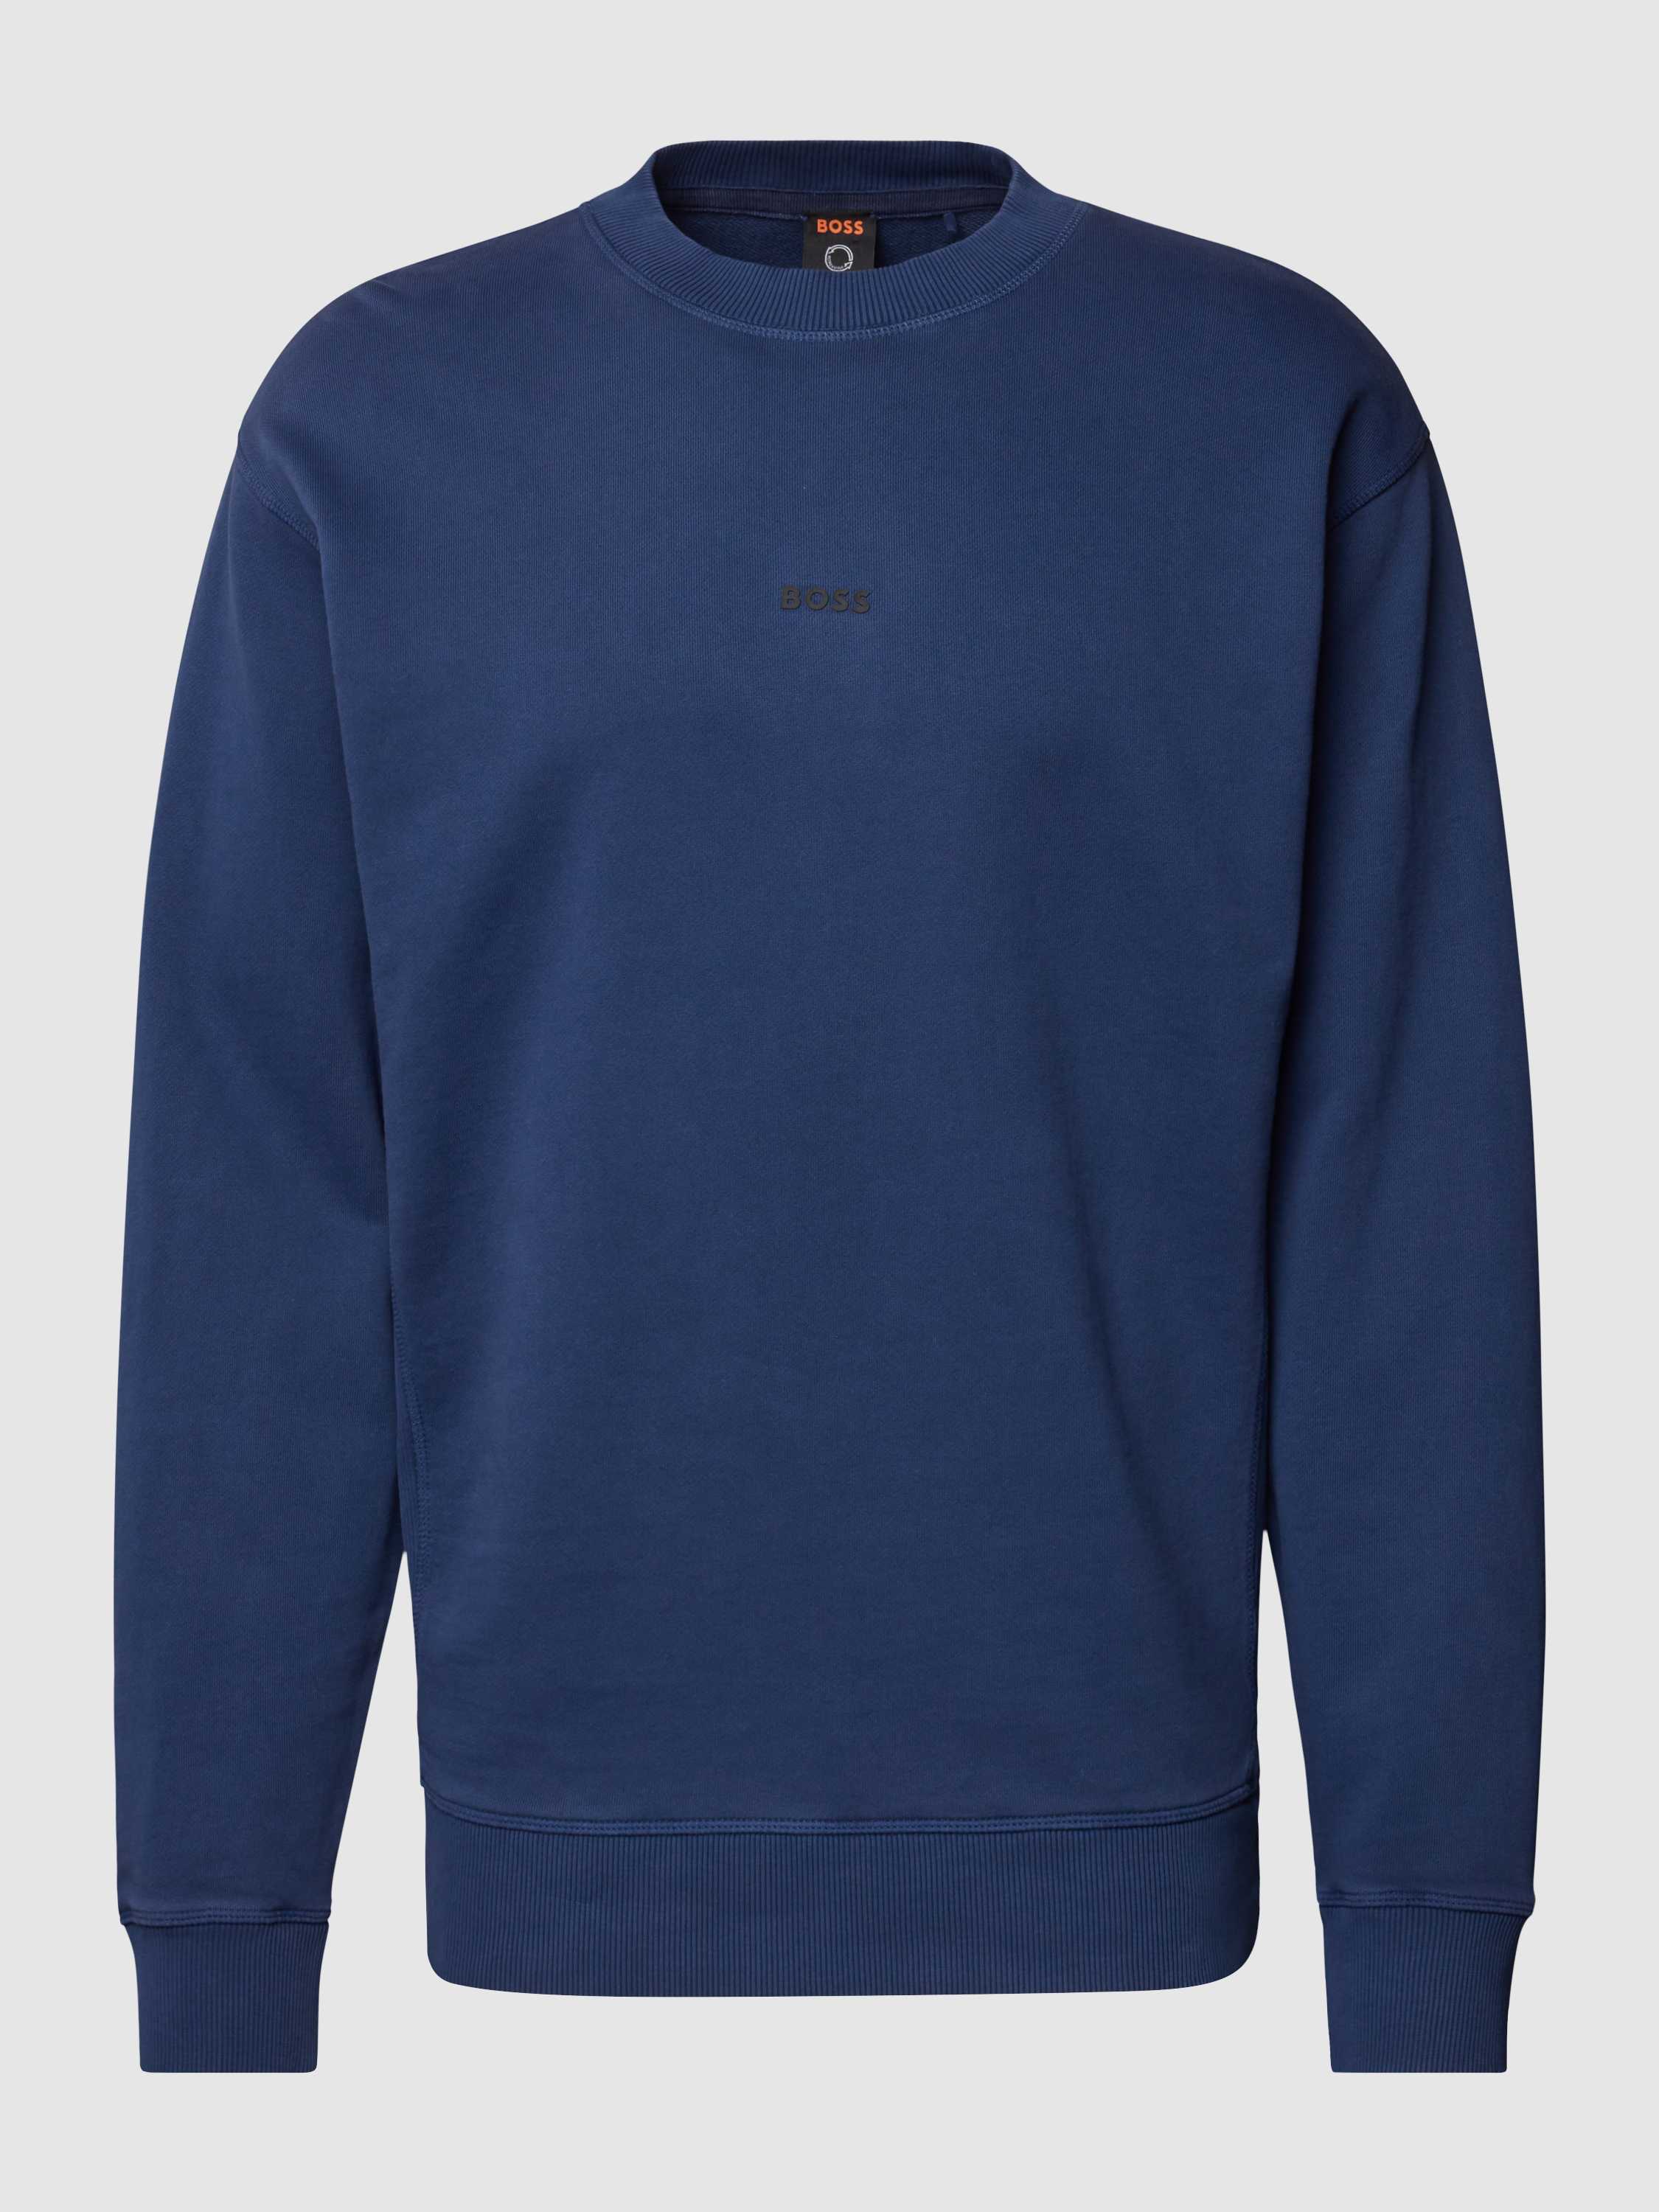 Sweatshirt mit Label-Print Modell 'Wefade'